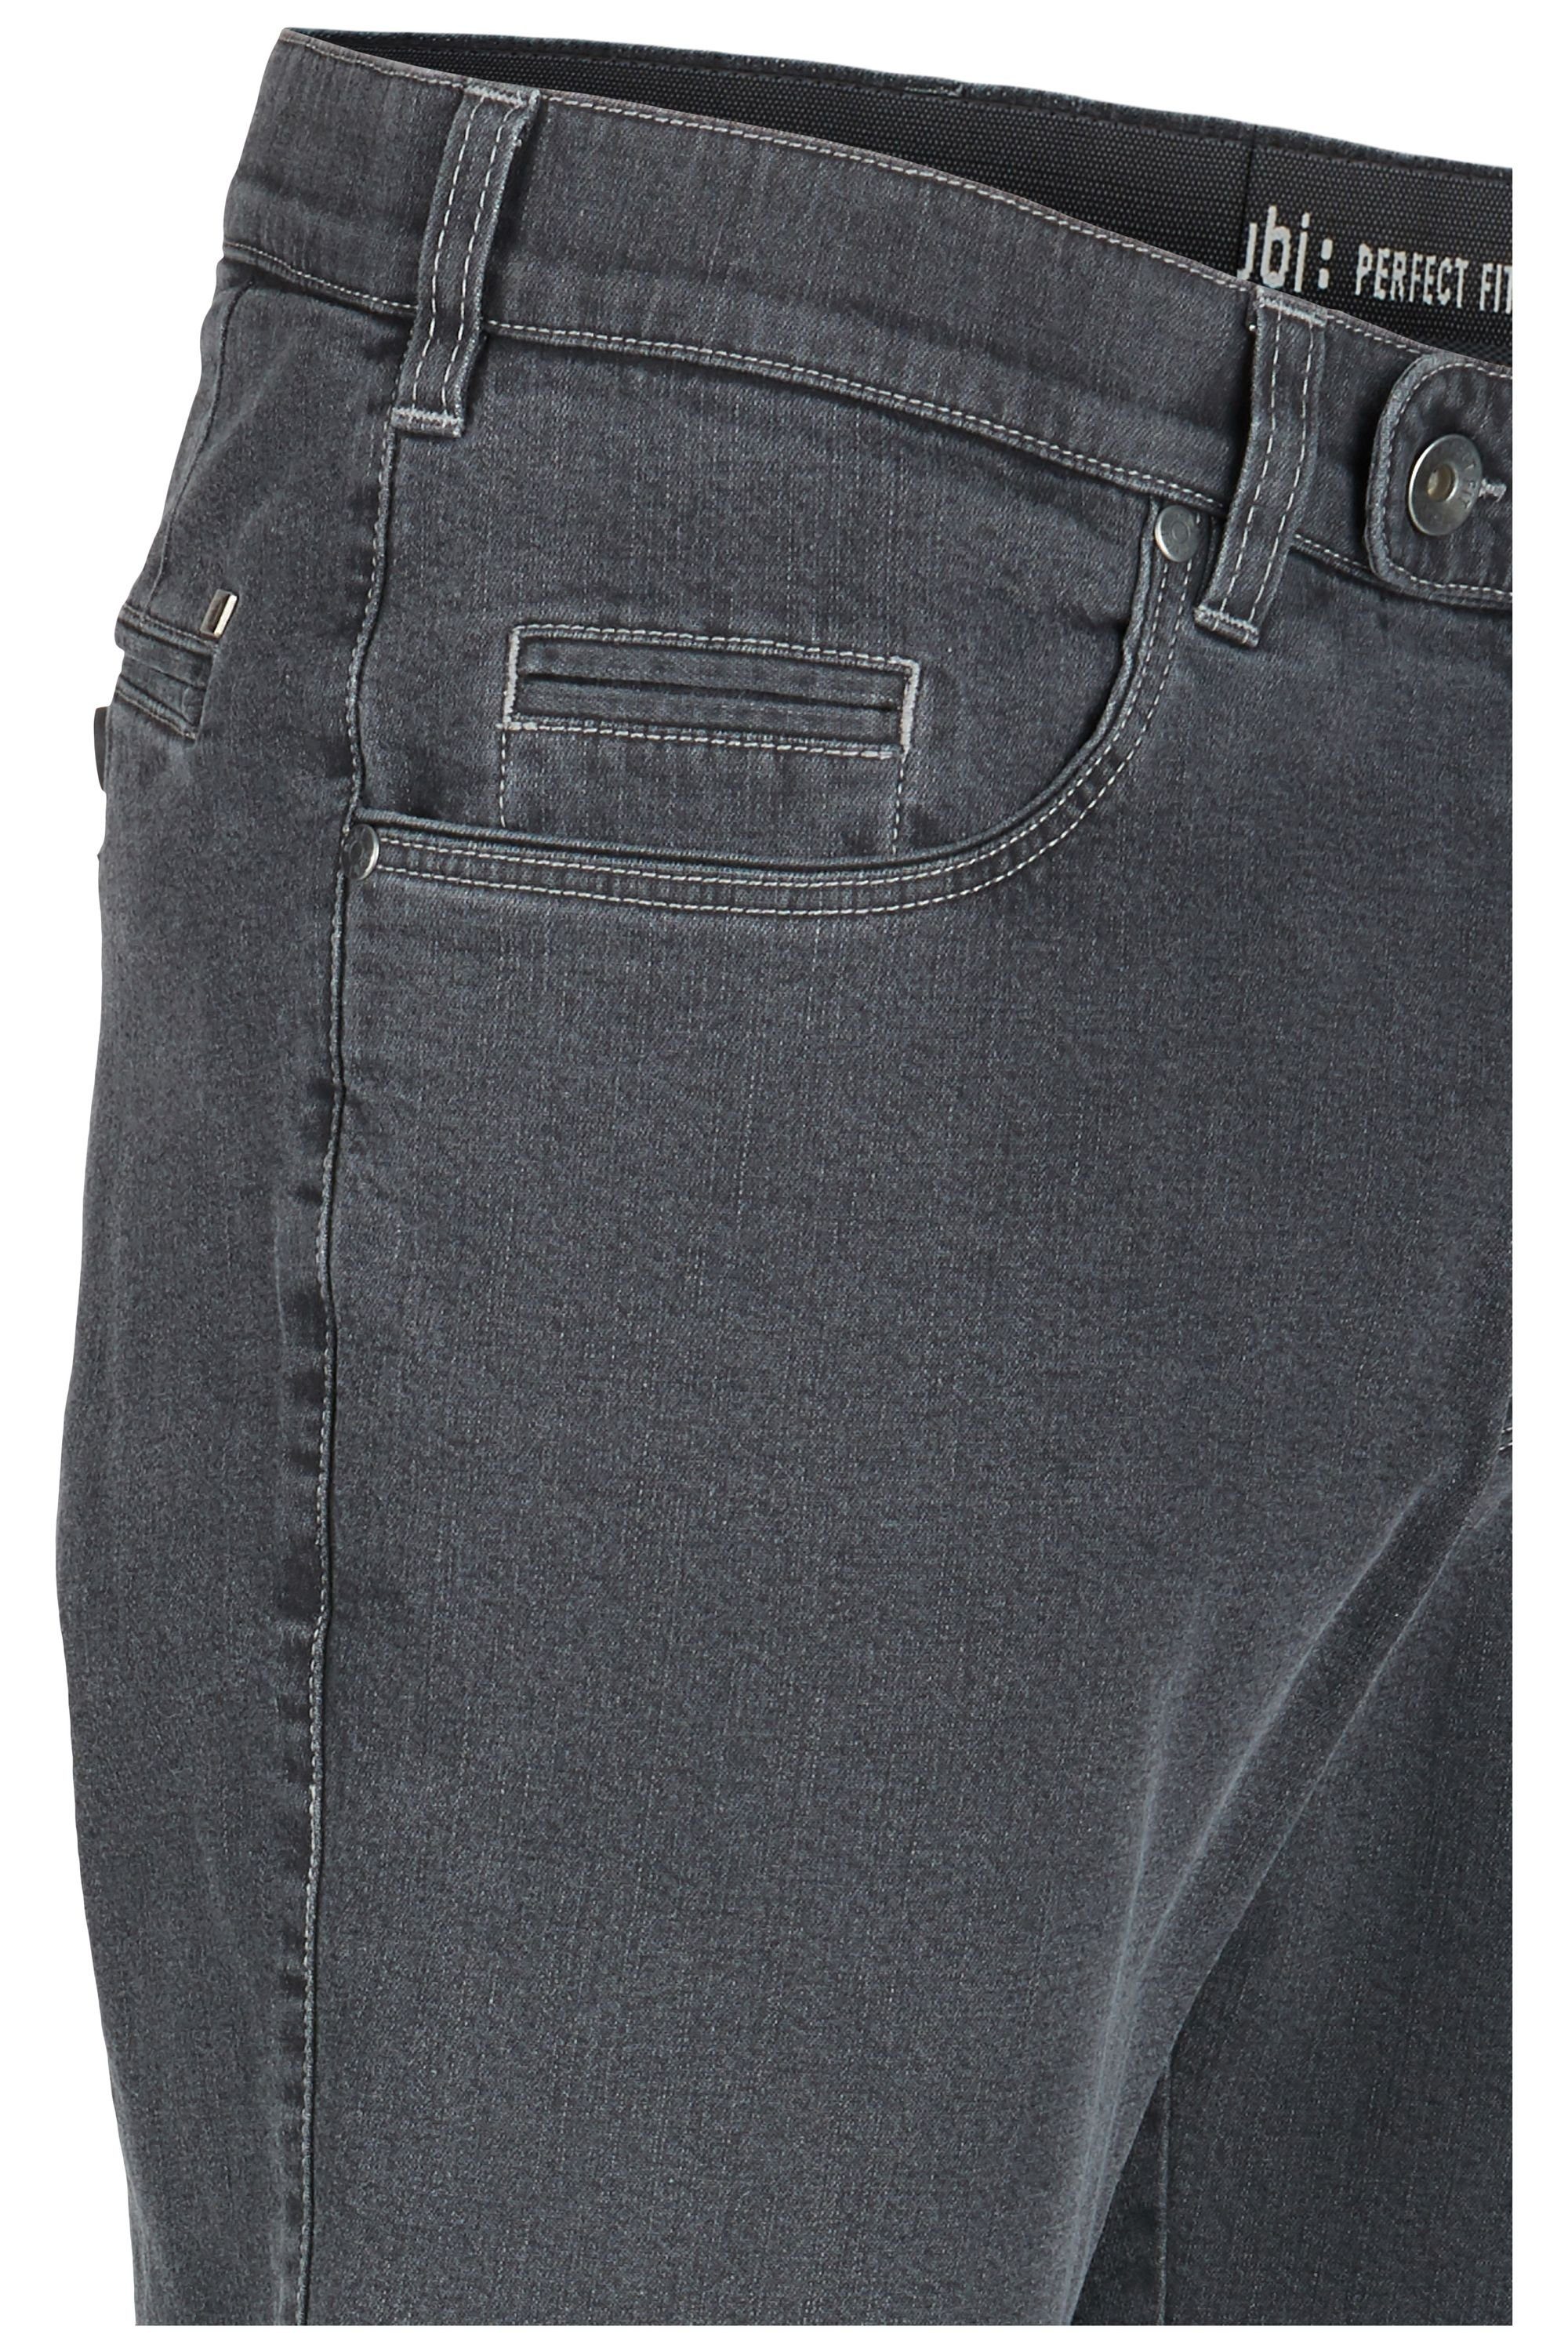 aubi: Bequeme Jeans Herren Hose 577 Fit Stretch Perfect grey aubi Modell (53) Jeans